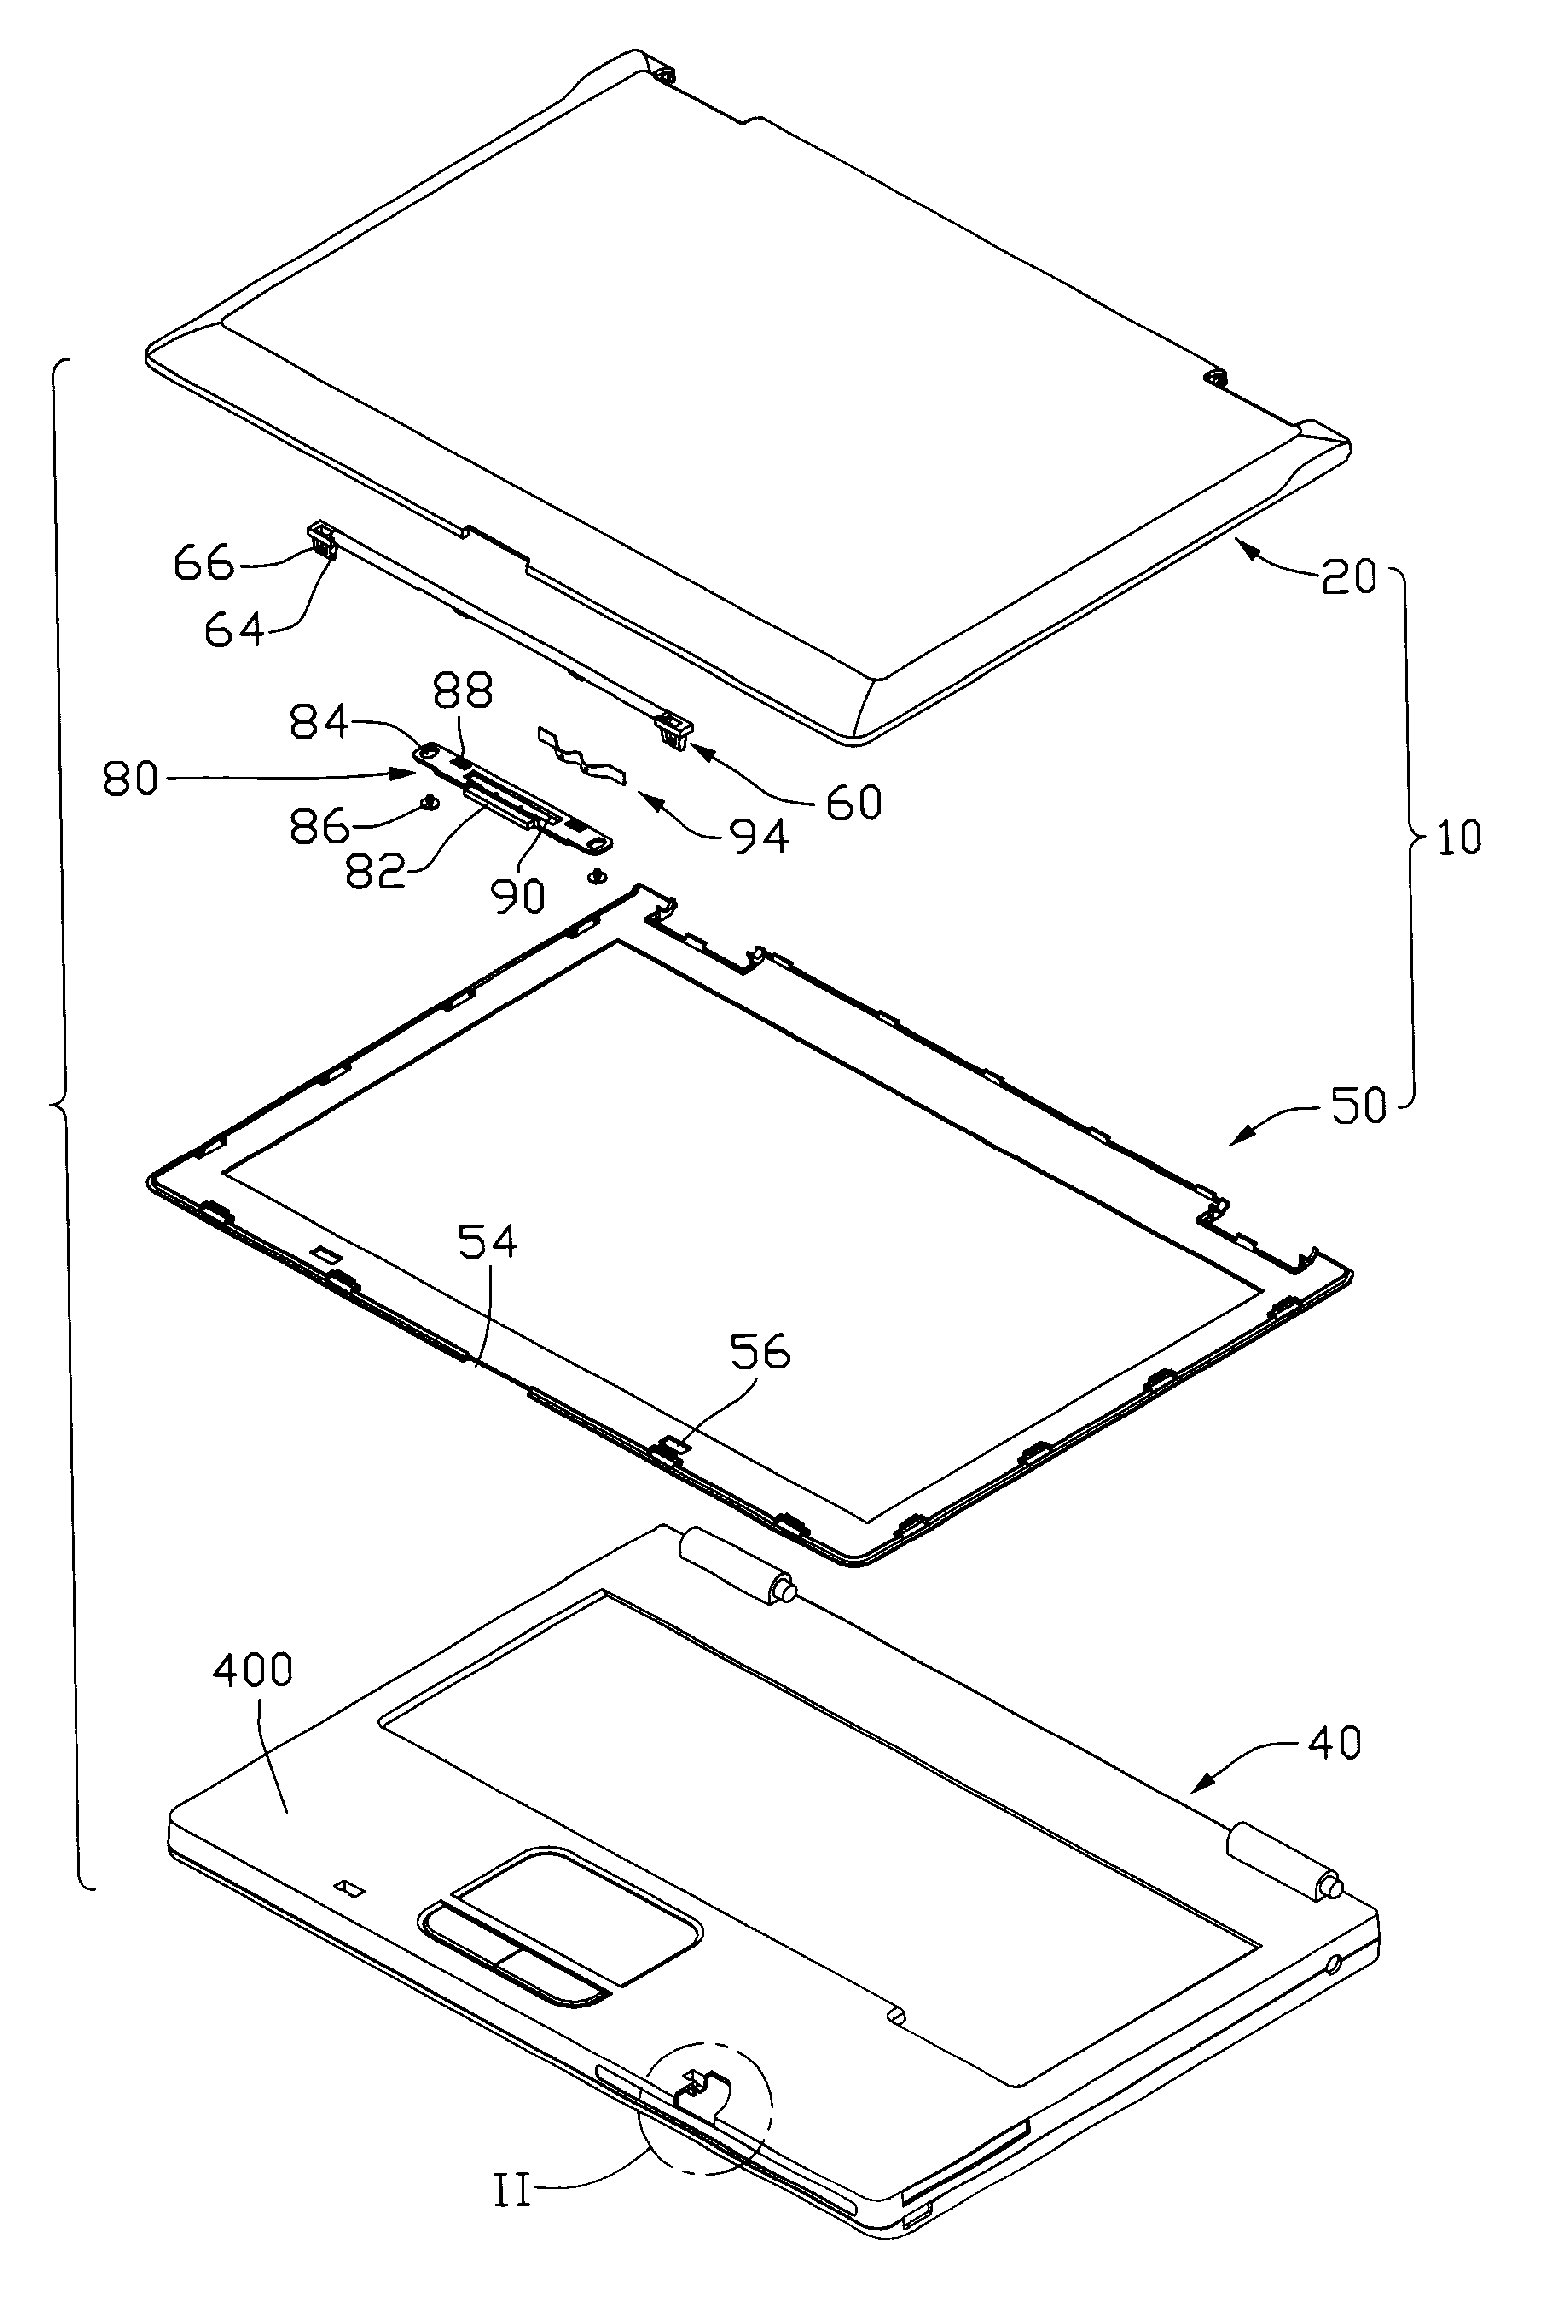 Foldable electronic device having a latch mechanism